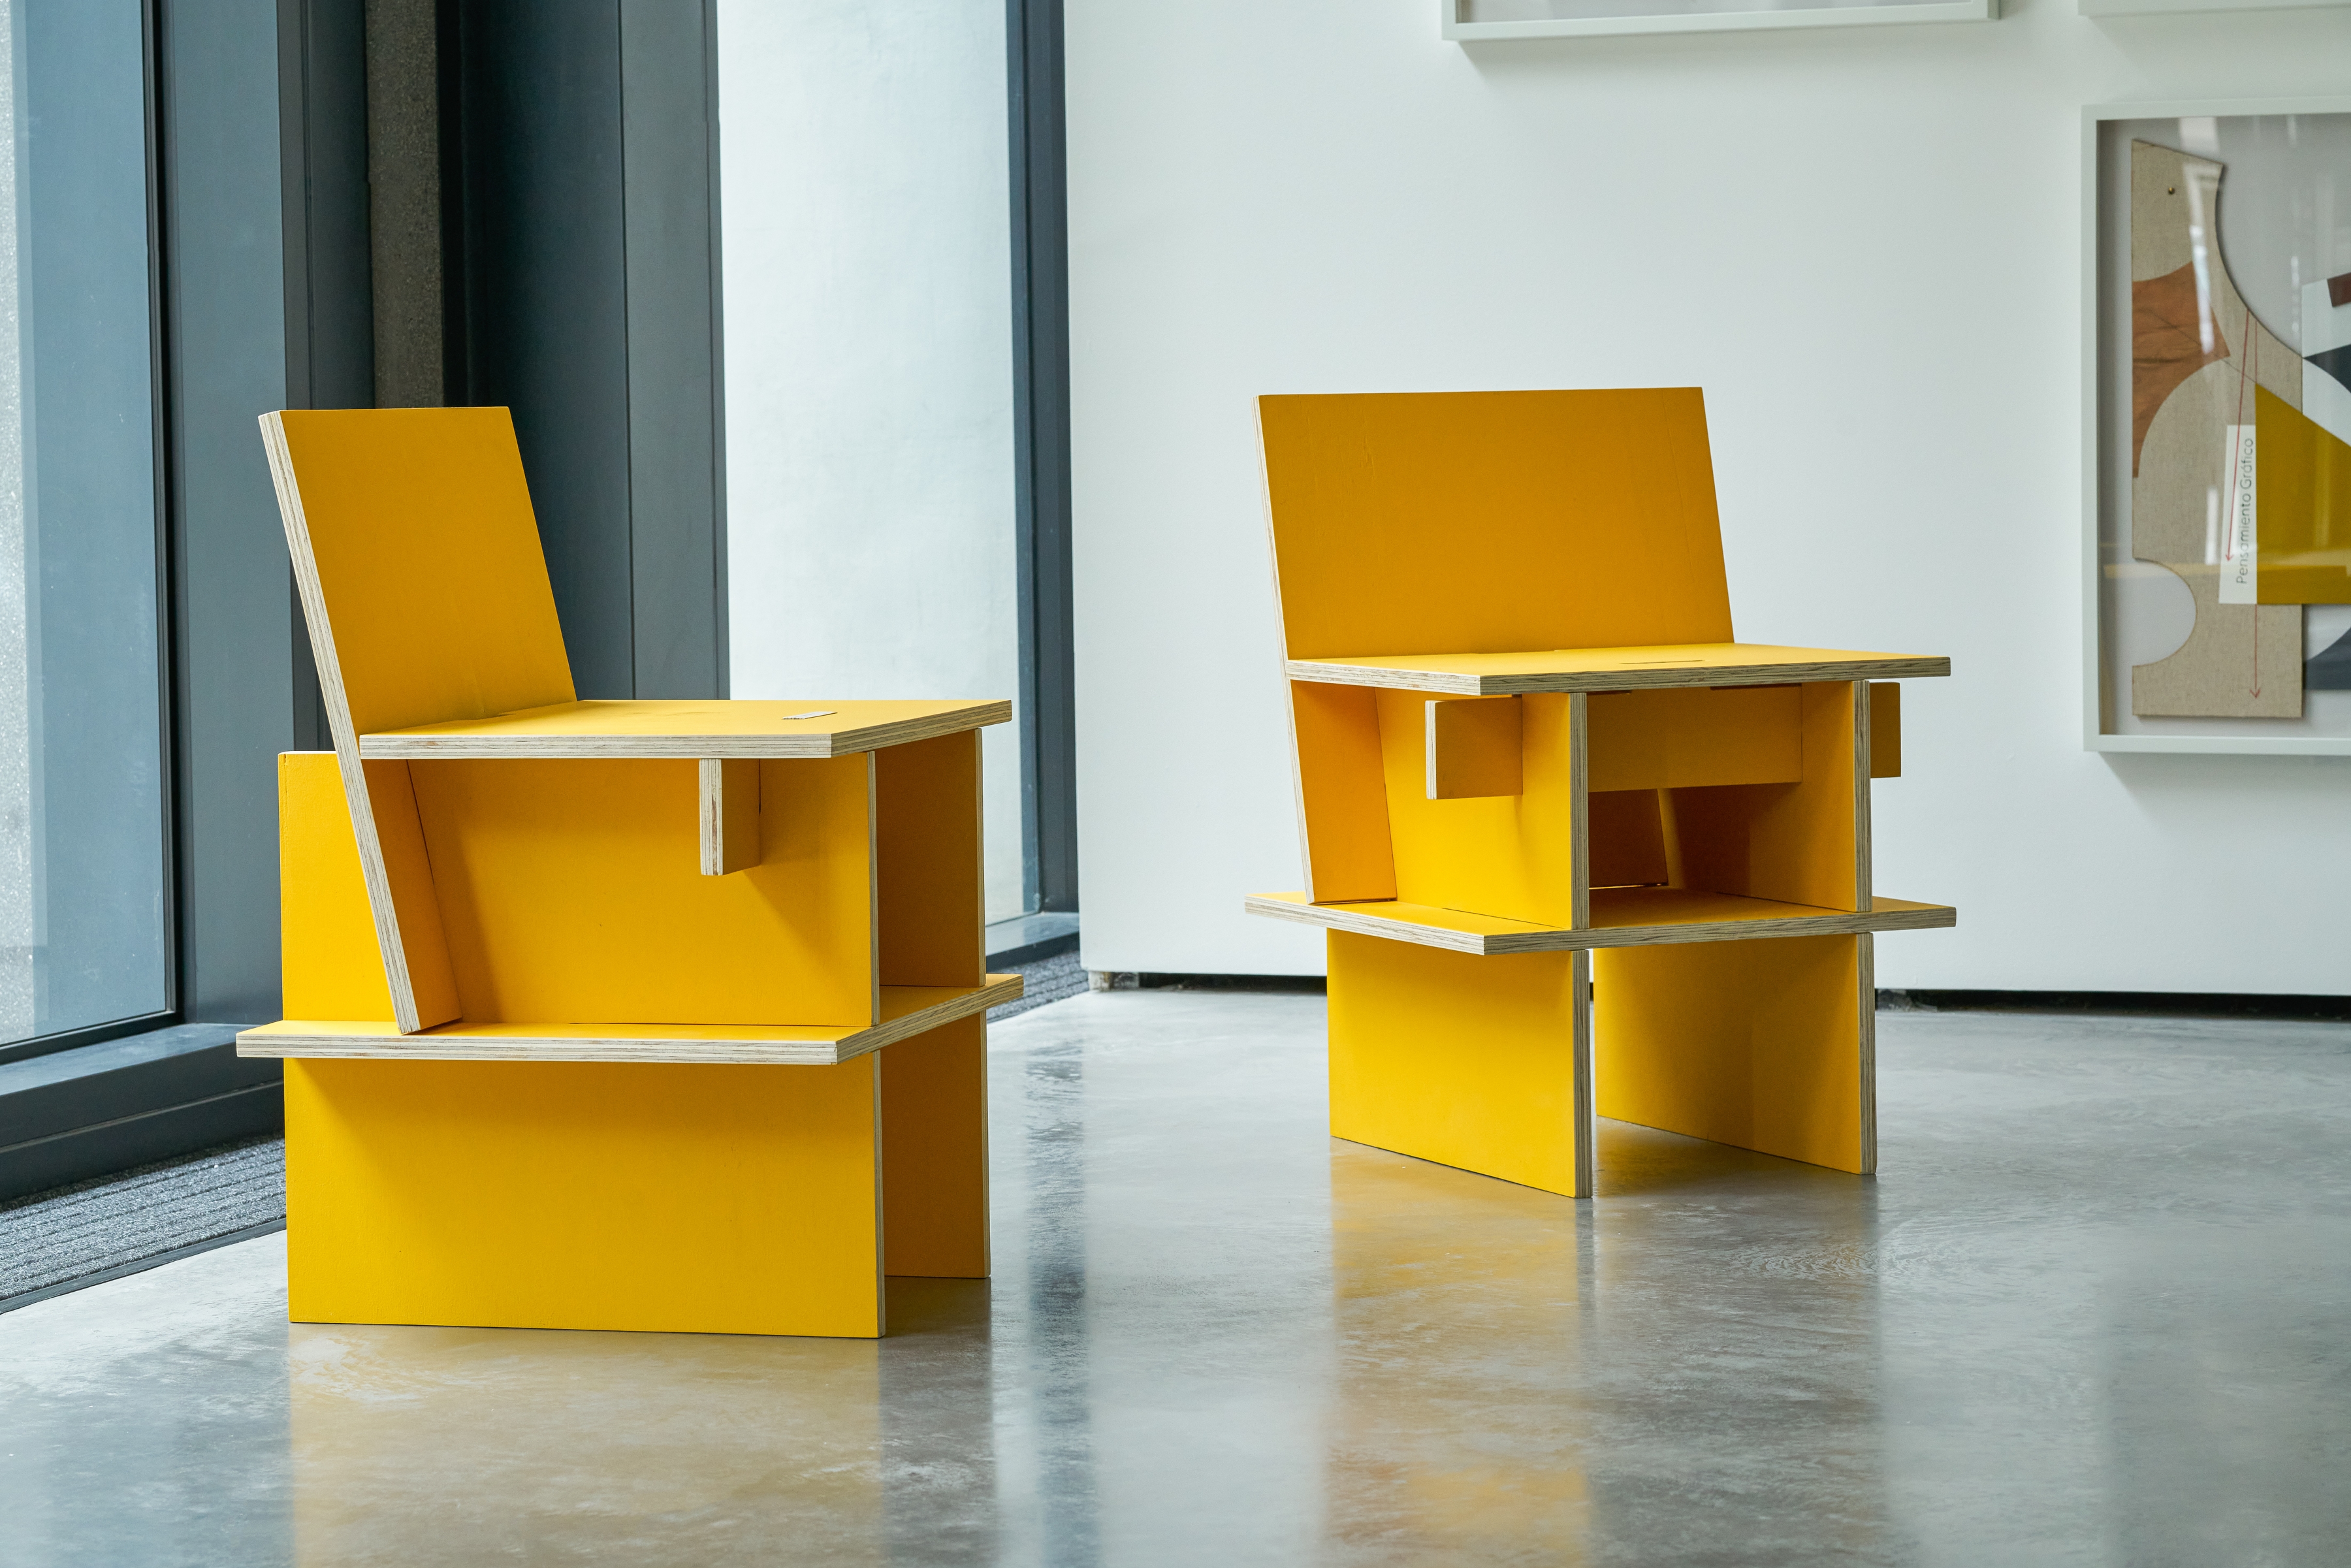 Mateo L&oacute;pez
Sillas N&uacute;cleo (two chairs)
2020
Wood, turmeric &amp;amp; acrylic paint, varnish
Work: 74 x 50 x 50 cm
Flatpack each chair: 50 x 50 x 10 cm
Unique

Sales enquiries